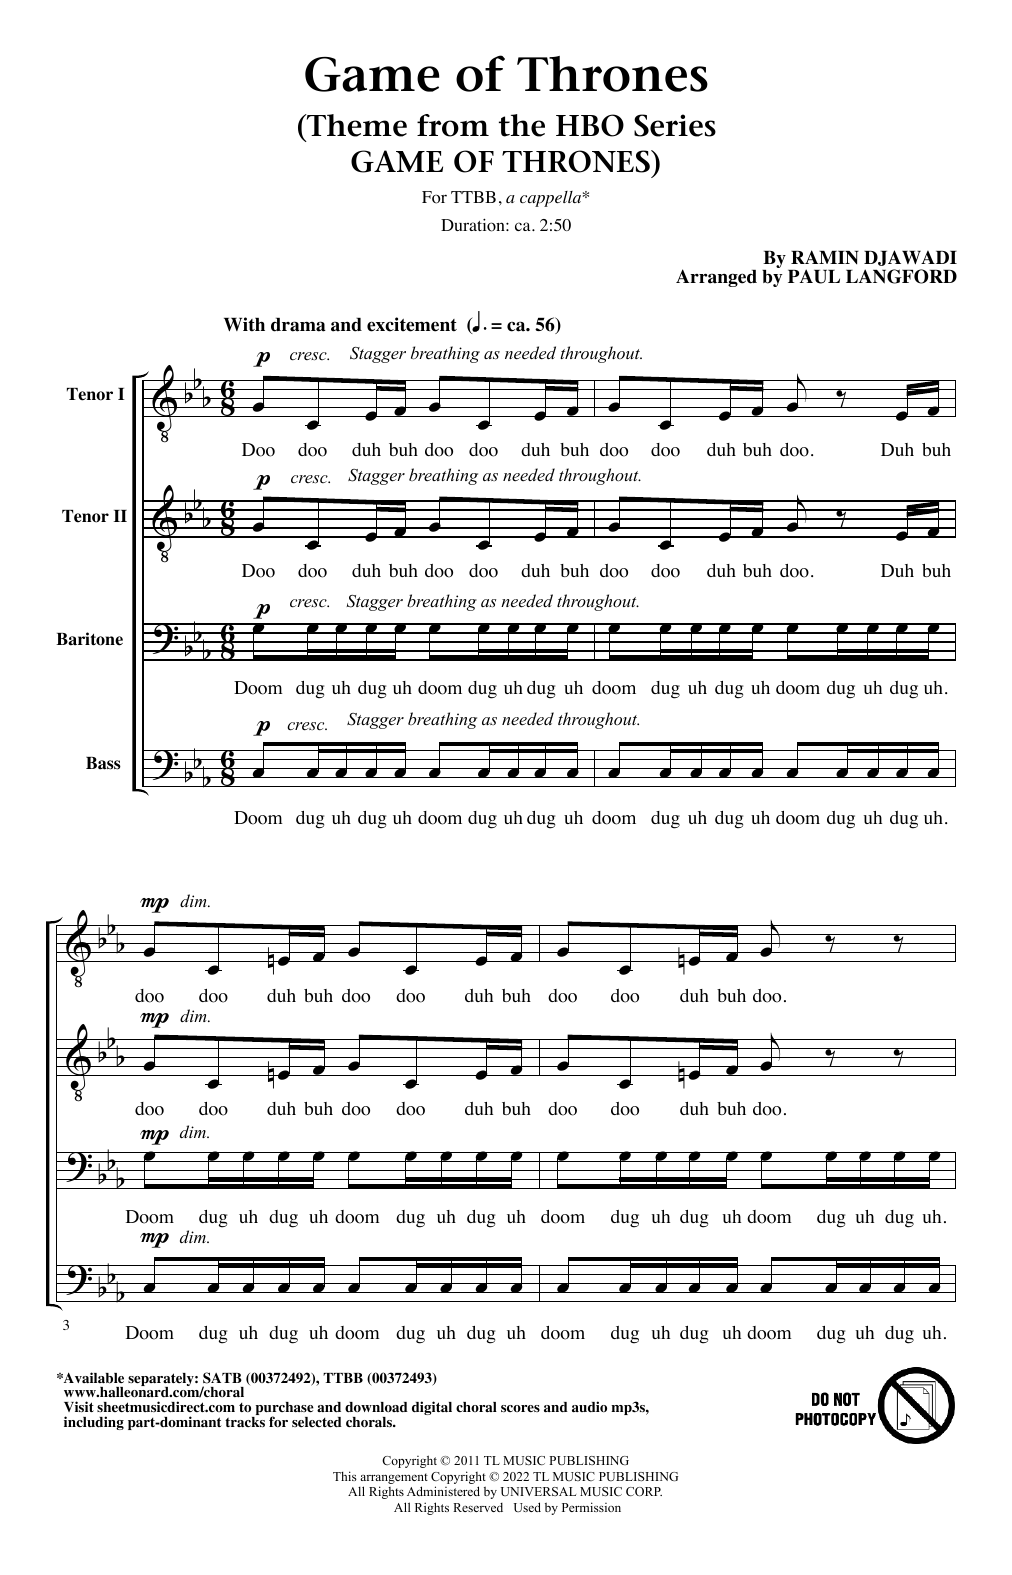 Ramin Djawadi Game Of Thrones (arr. Paul Langford) Sheet Music Notes & Chords for TTBB Choir - Download or Print PDF